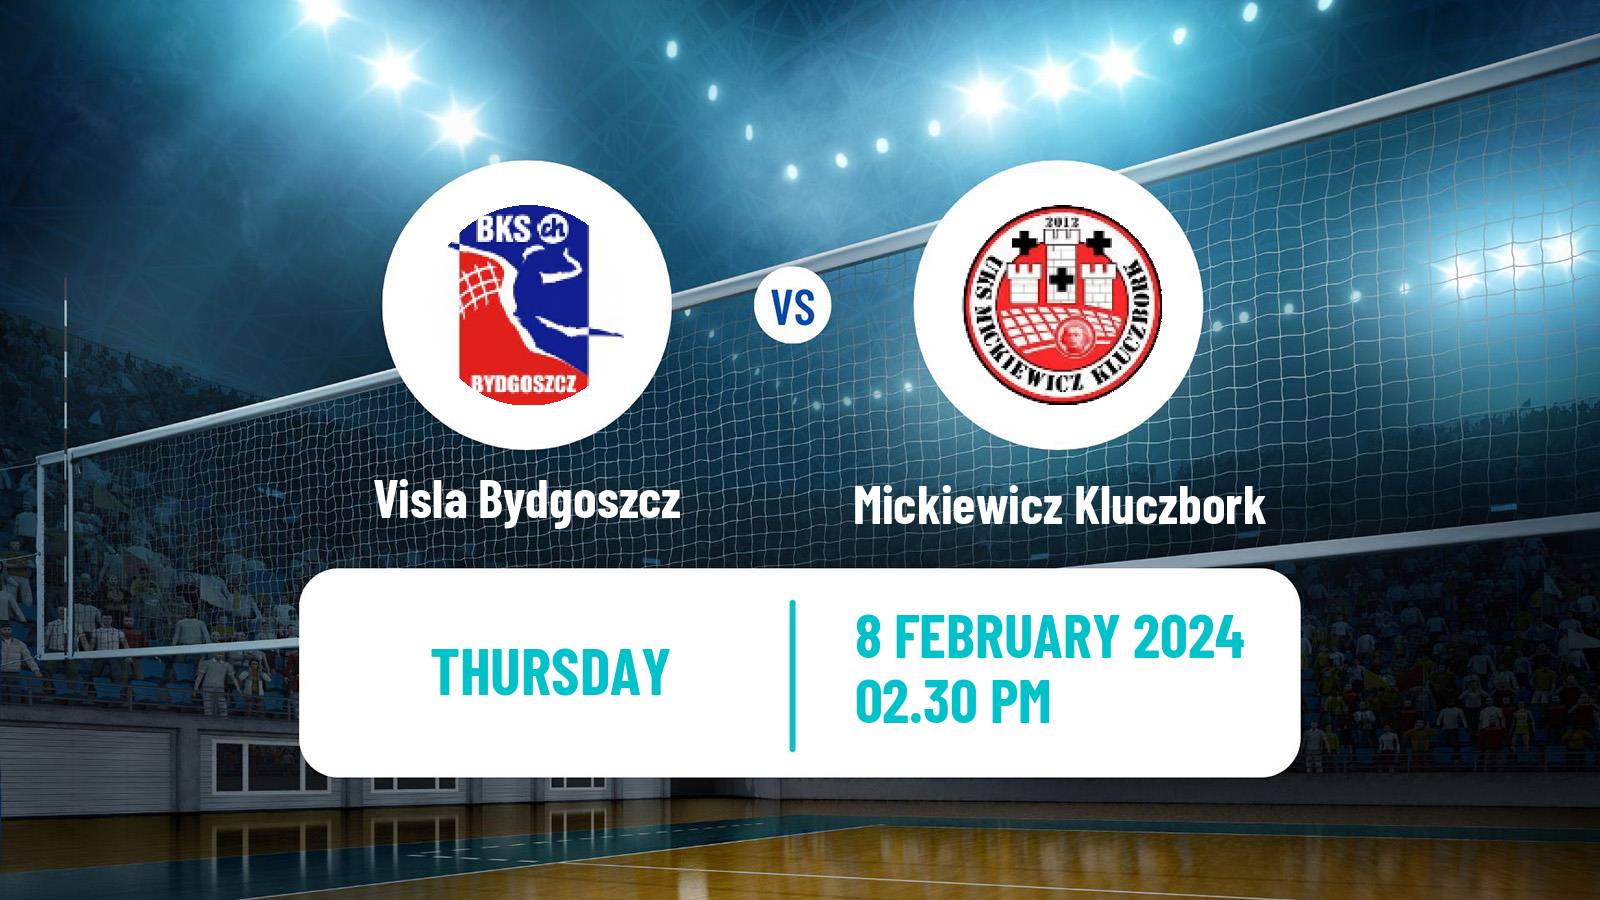 Volleyball Polish I Liga Volleyball Visla Bydgoszcz - Mickiewicz Kluczbork